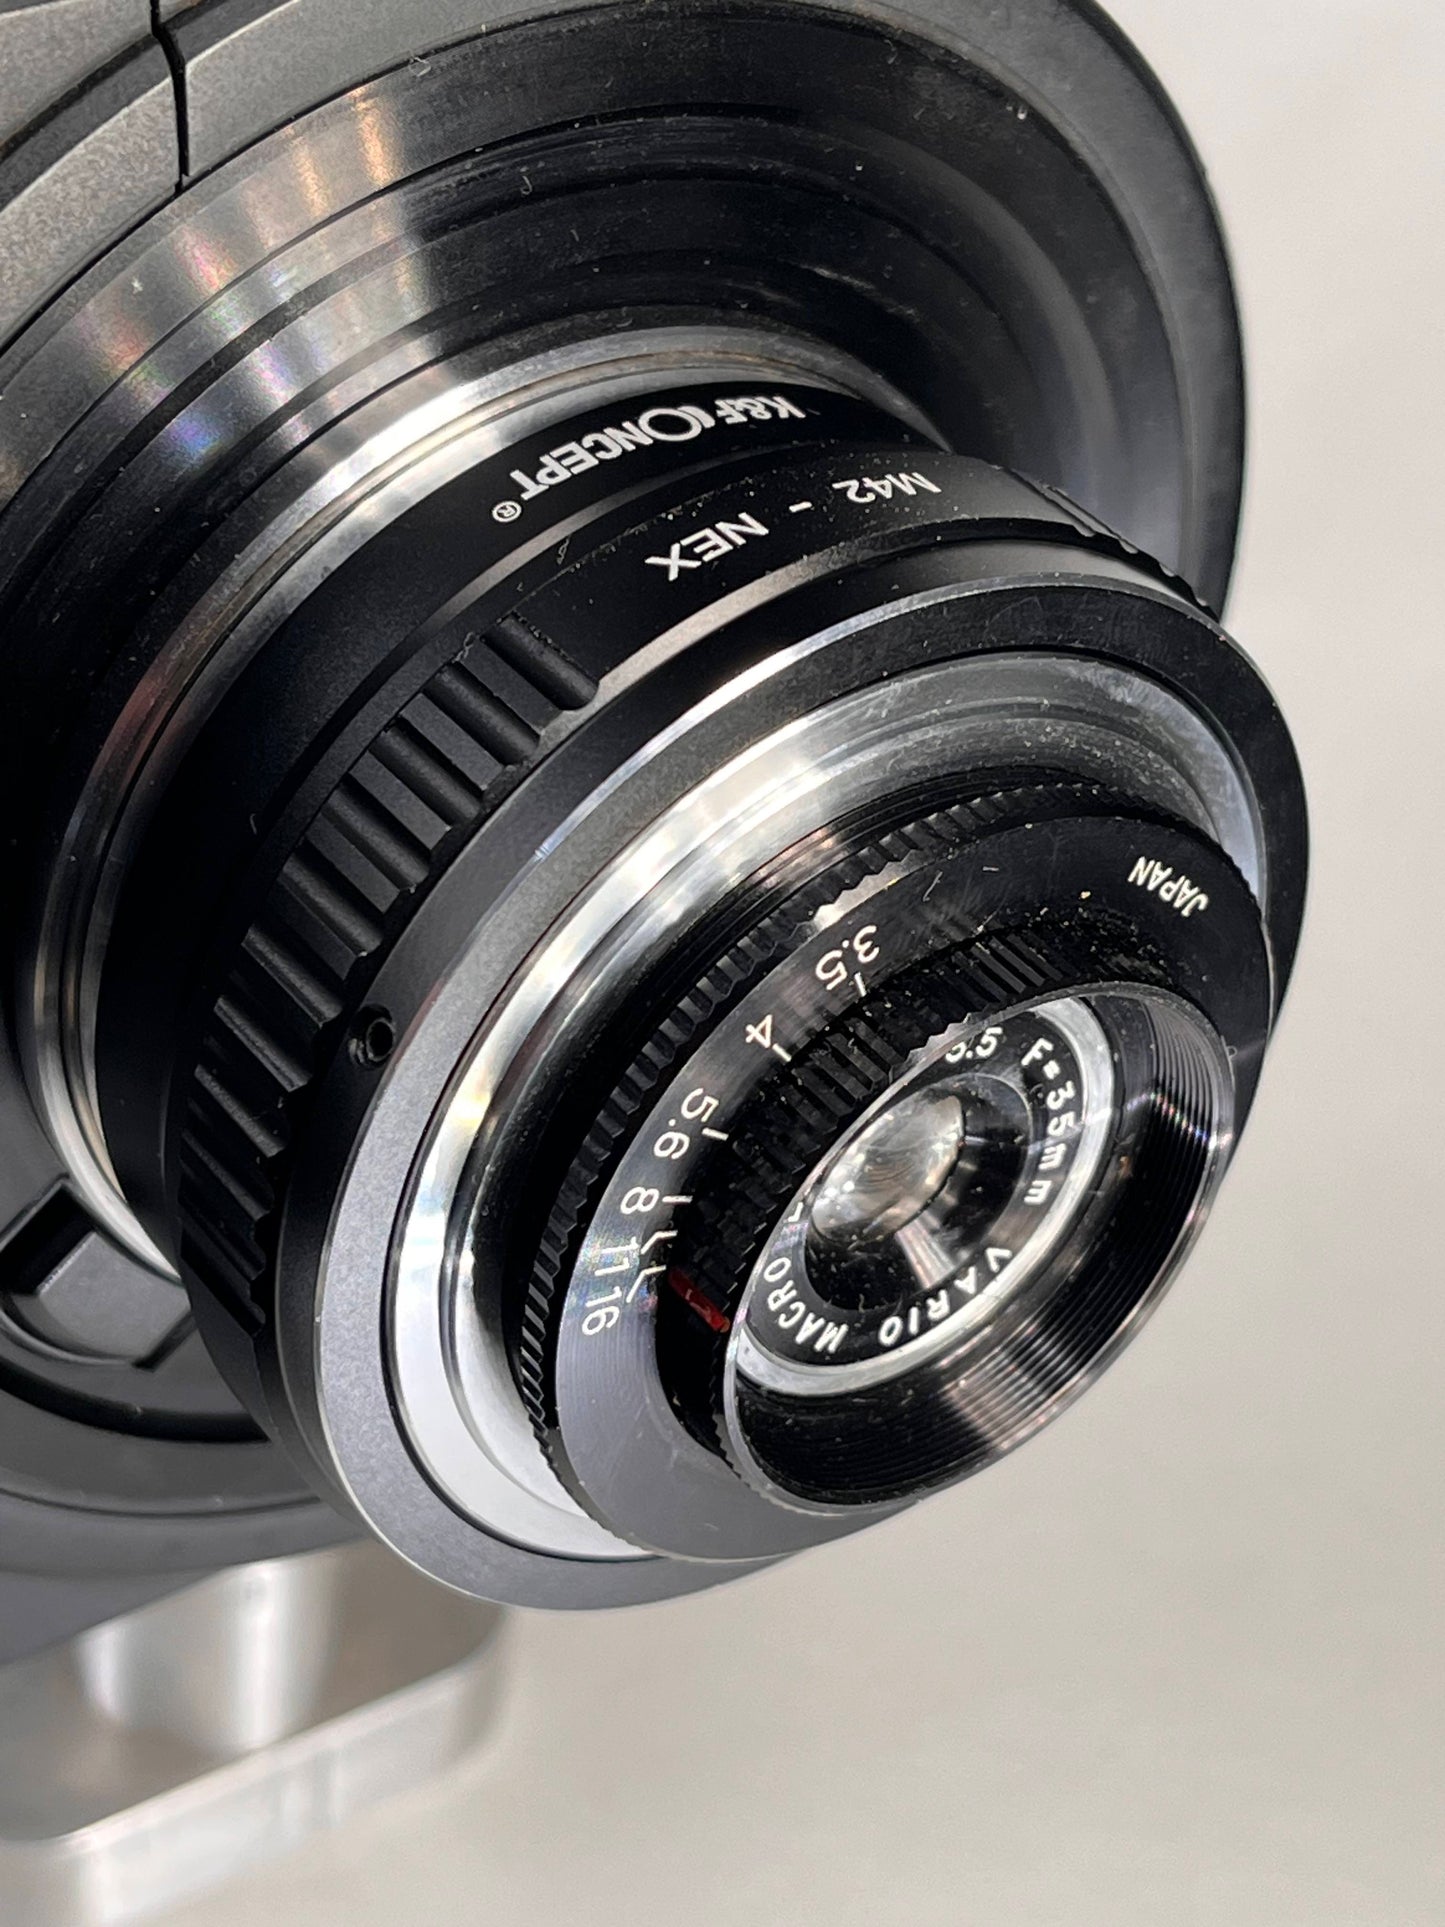 VARIO macro lens 35mm f3.5